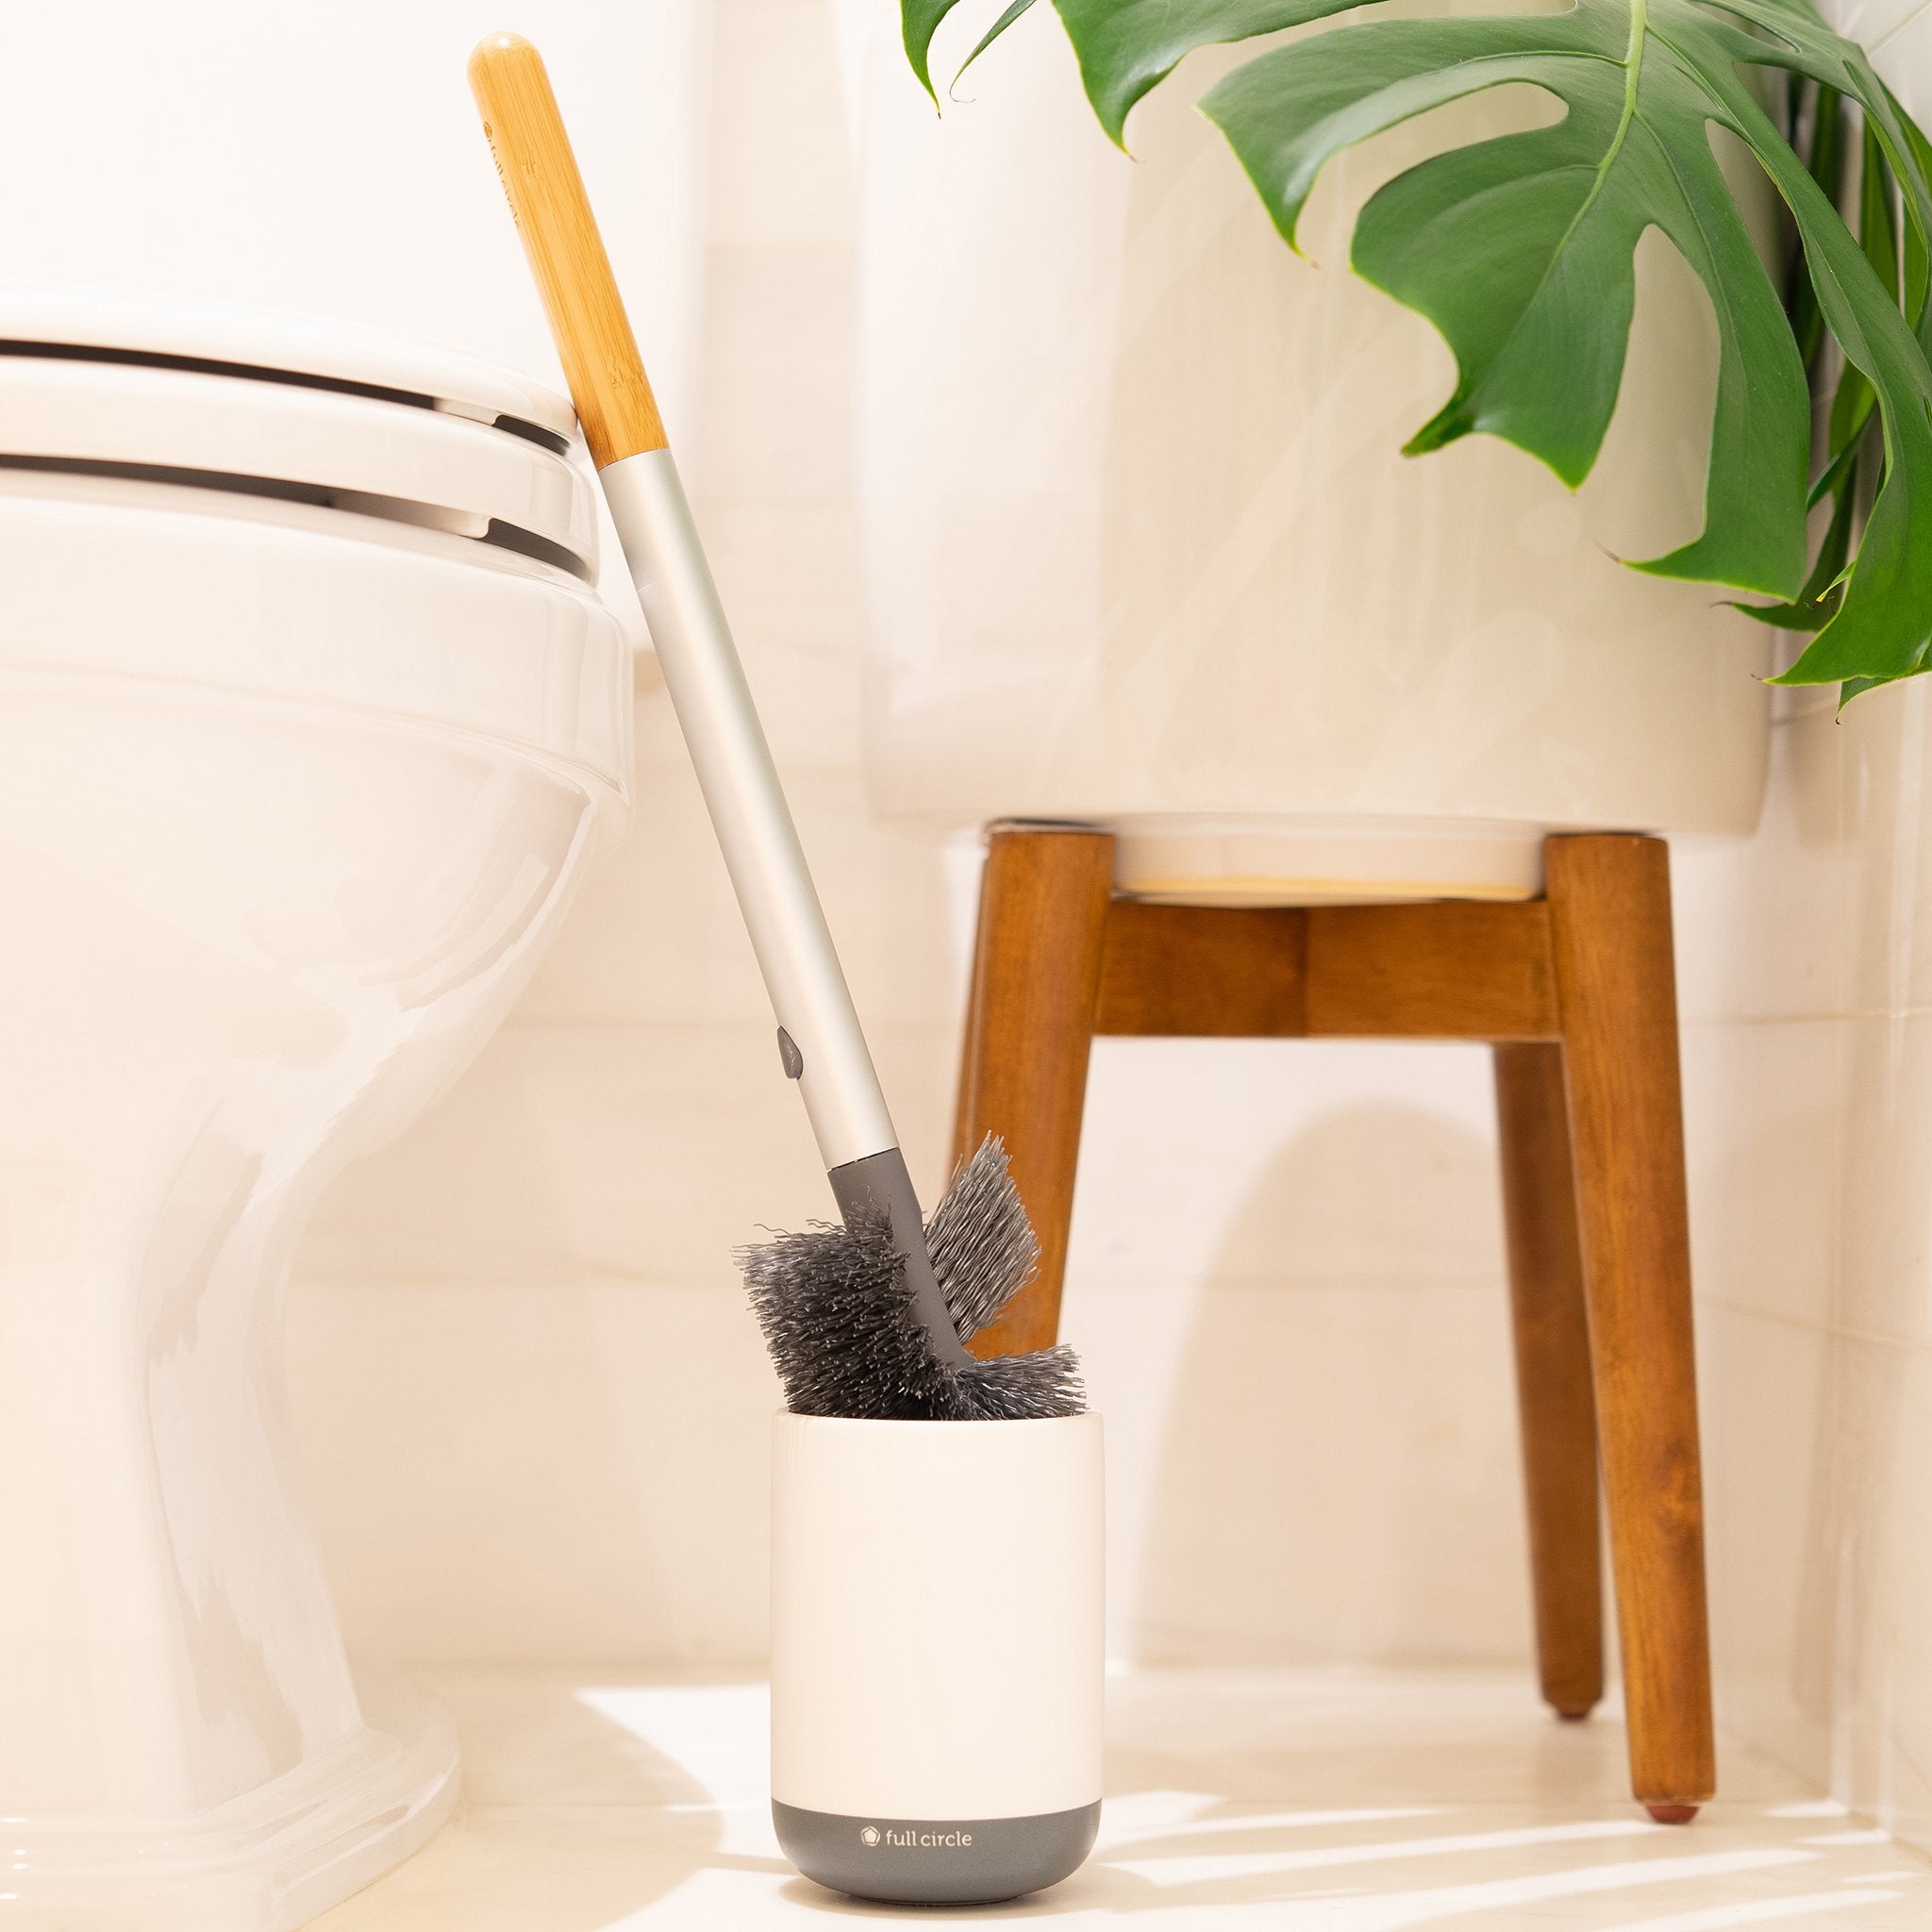 Buy Gebi Prima Half Round Toilet Brush - Nylon Bristles, Durable